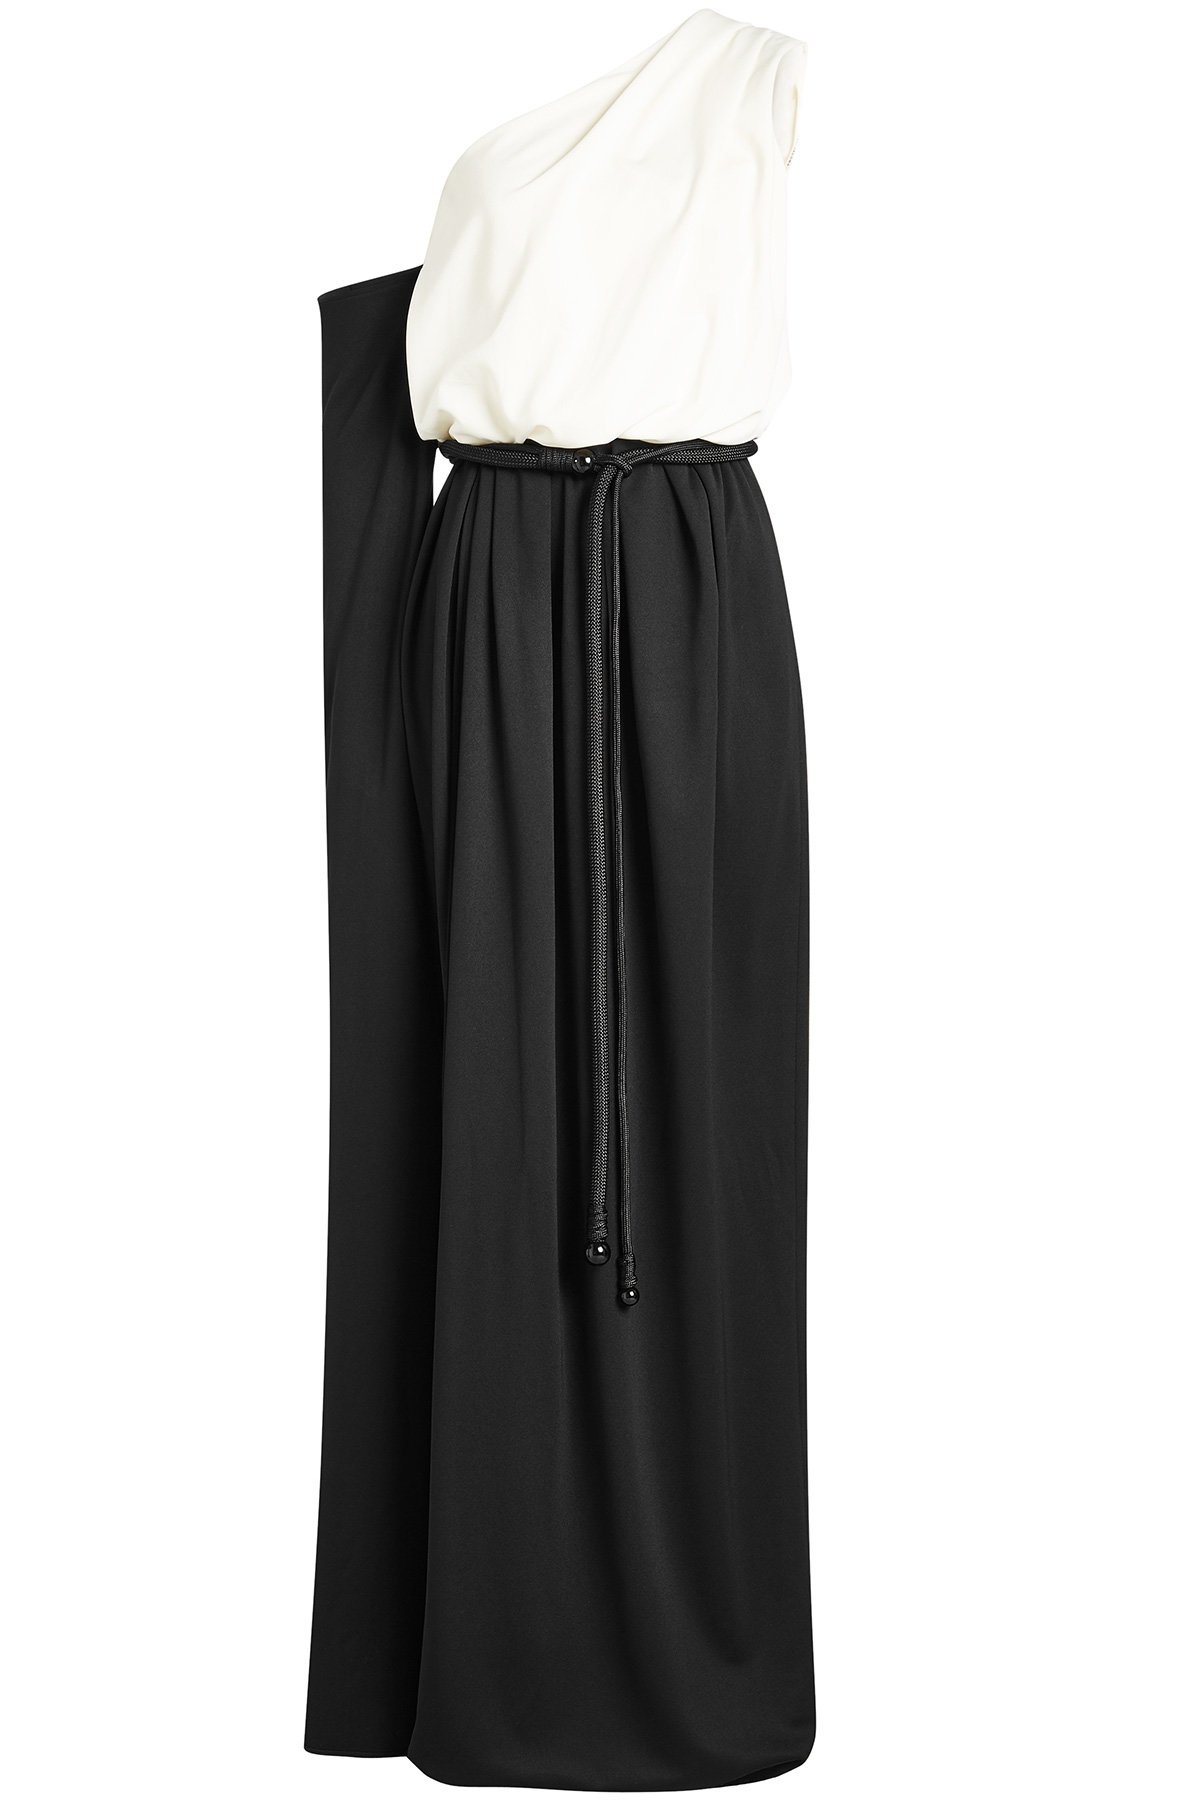 Marc Jacobs - Asymmetric Gown